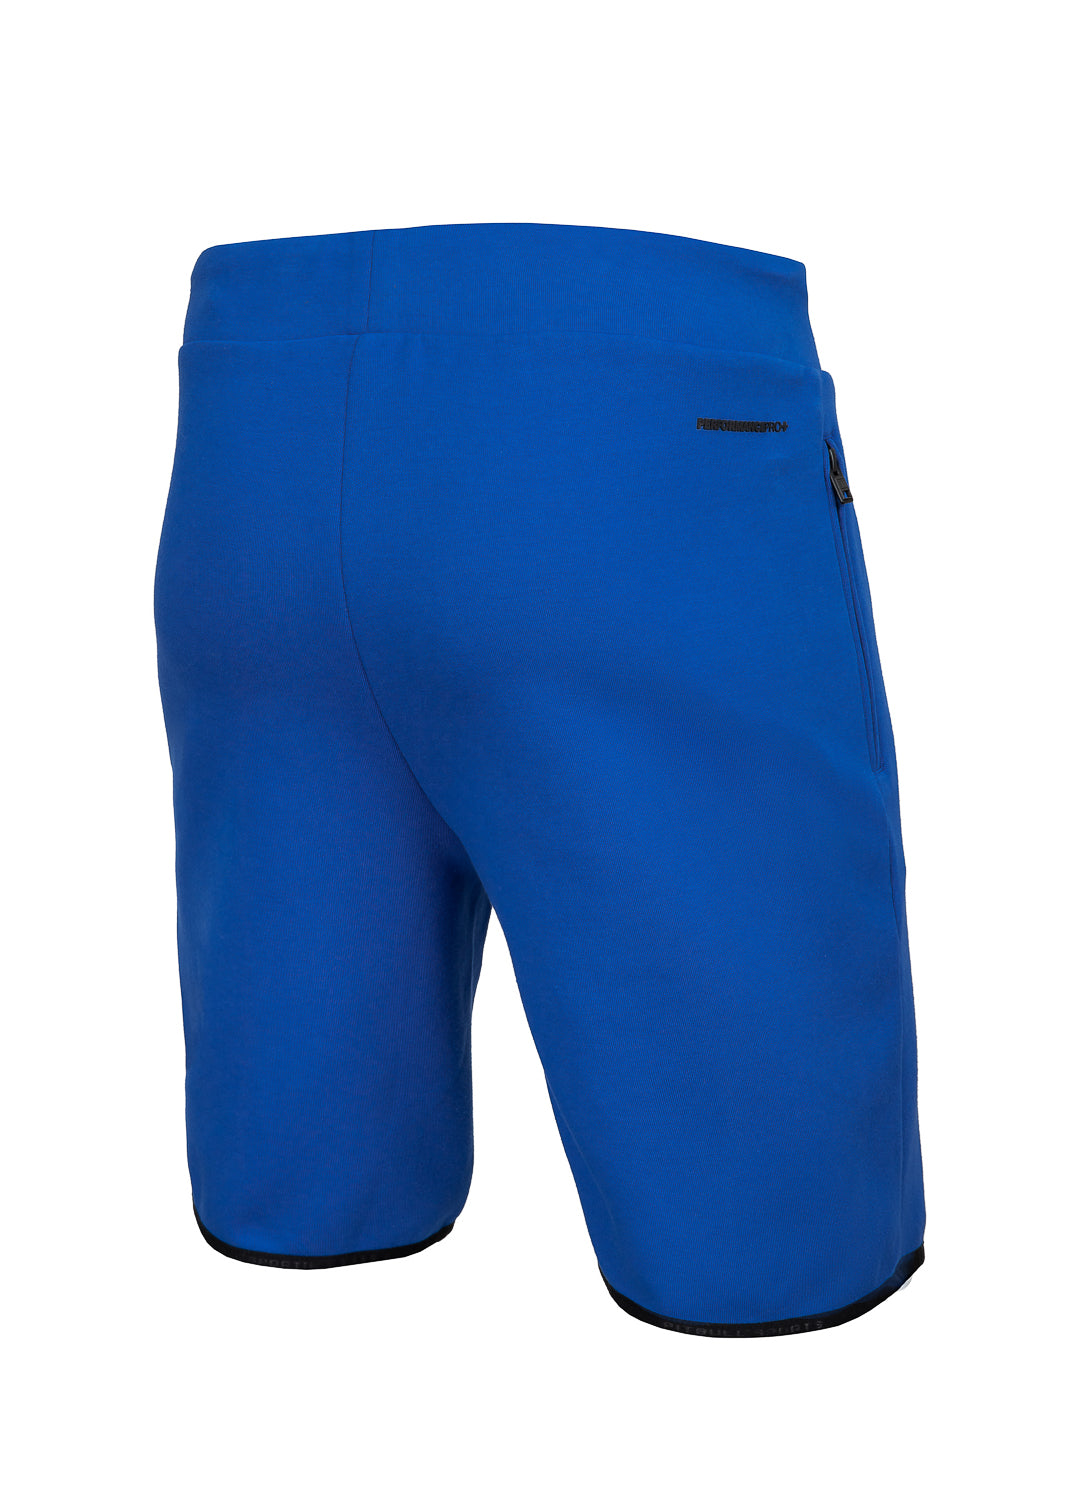 PHOENIX Shorts Royal Blue.